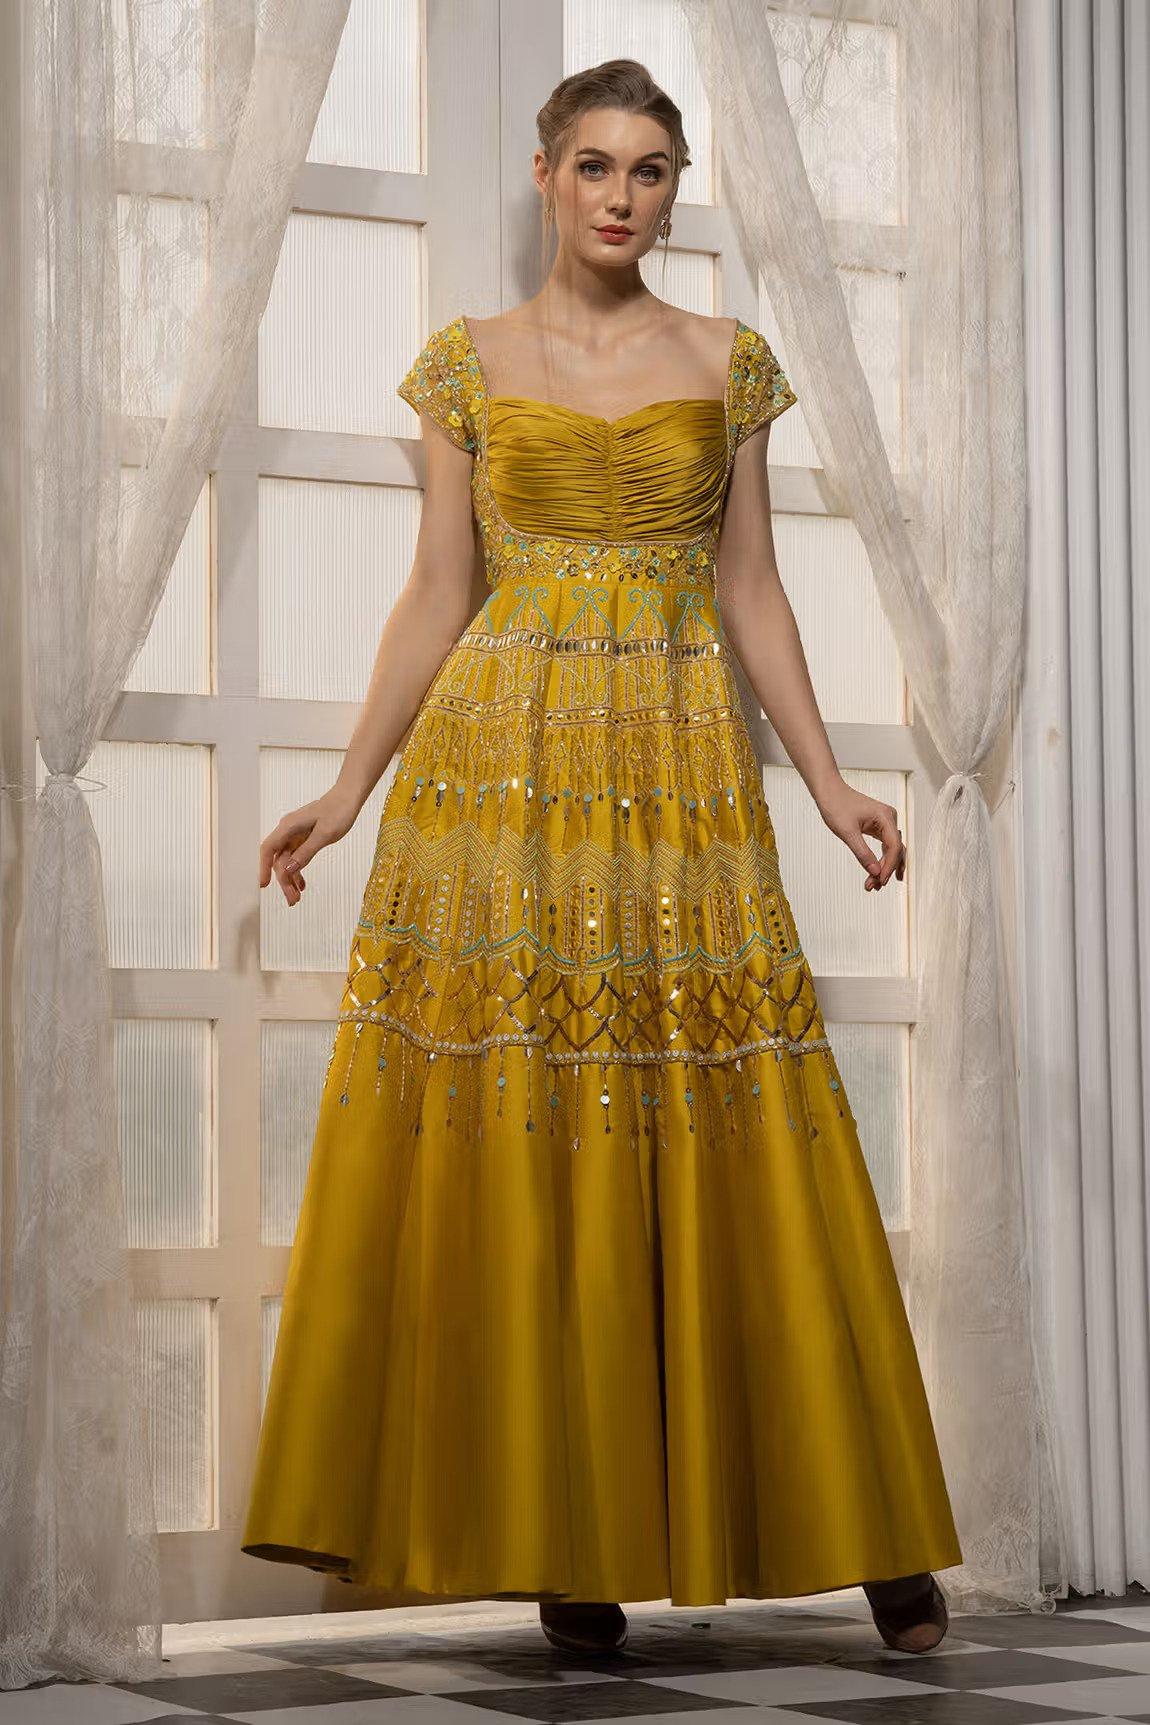 rose gold wedding gown — Inspiration — Carol Hannah